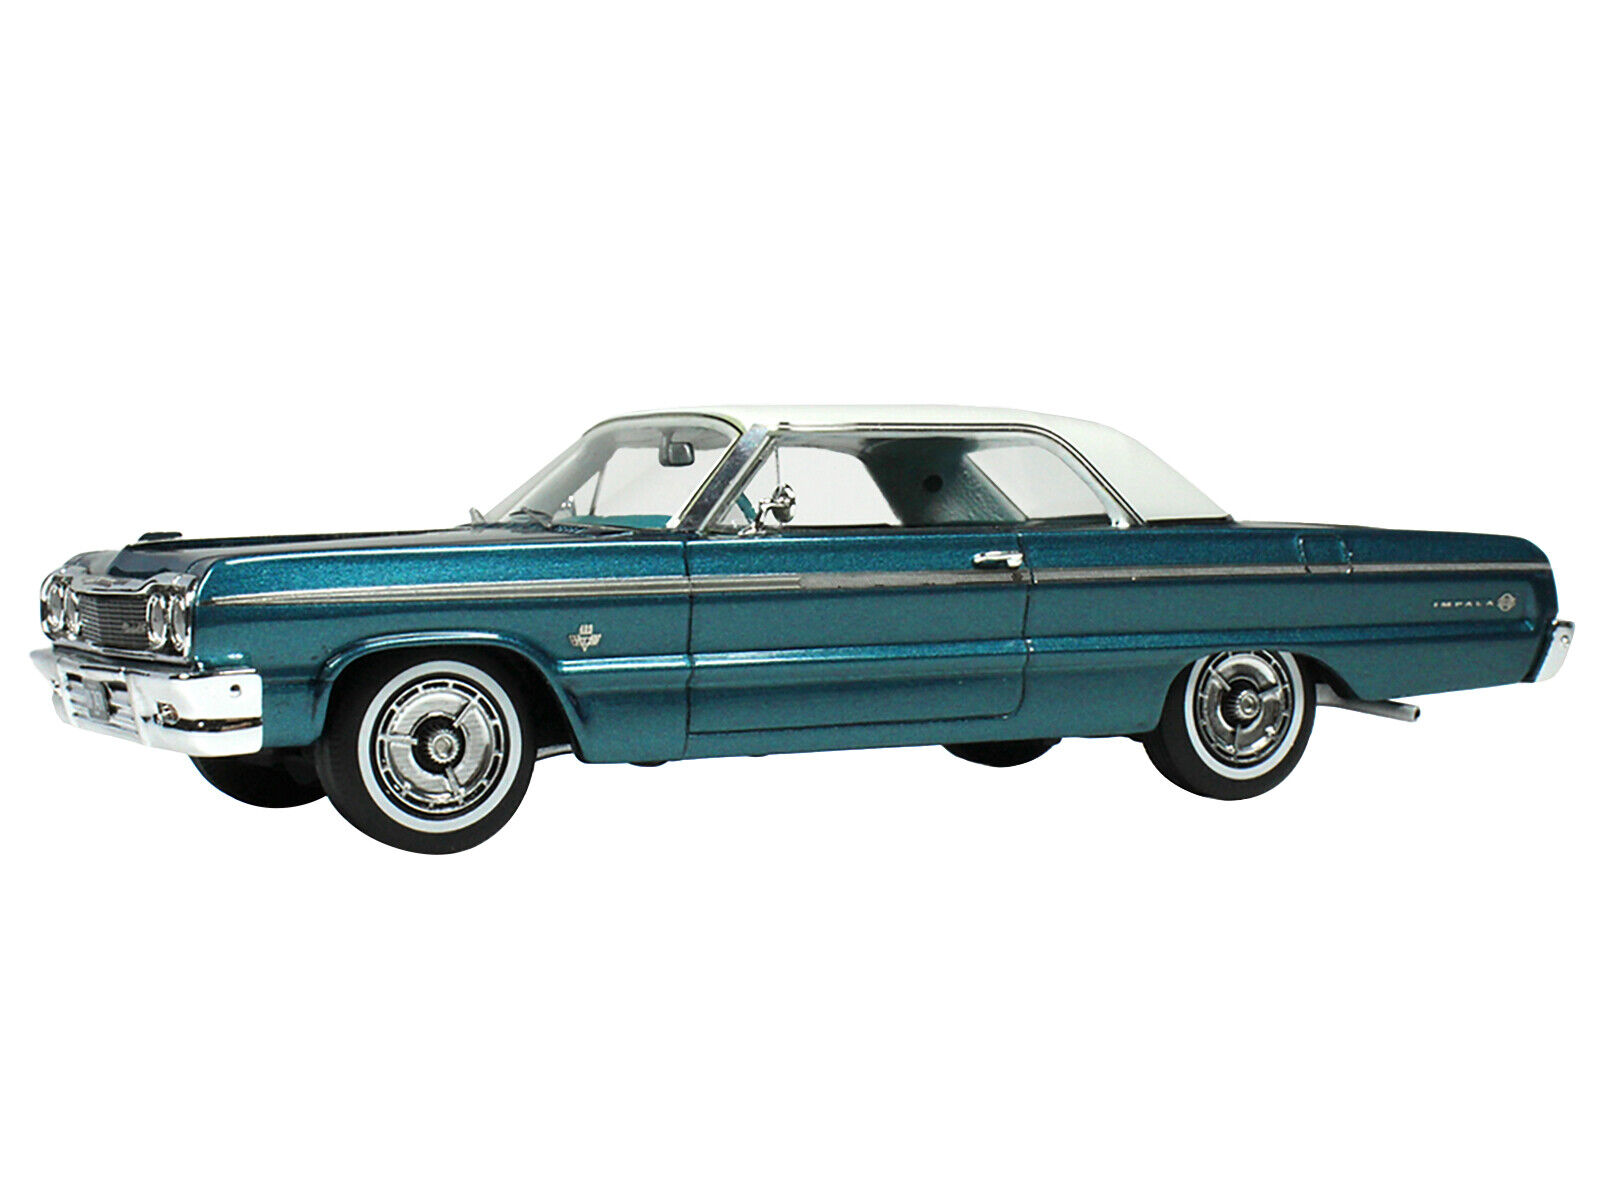 1964 Chevrolet Impala Lagoon Aqua Blue Metallic with Blue Interior and White Top